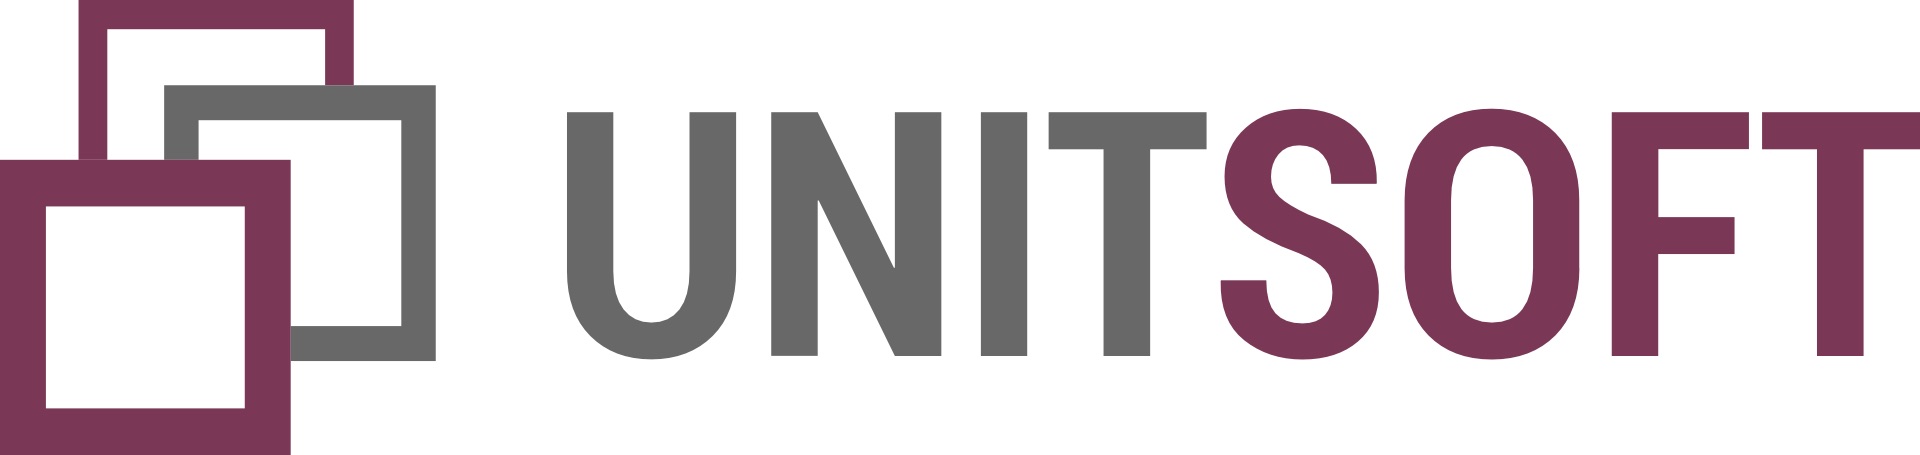 Unitsoft Inc.